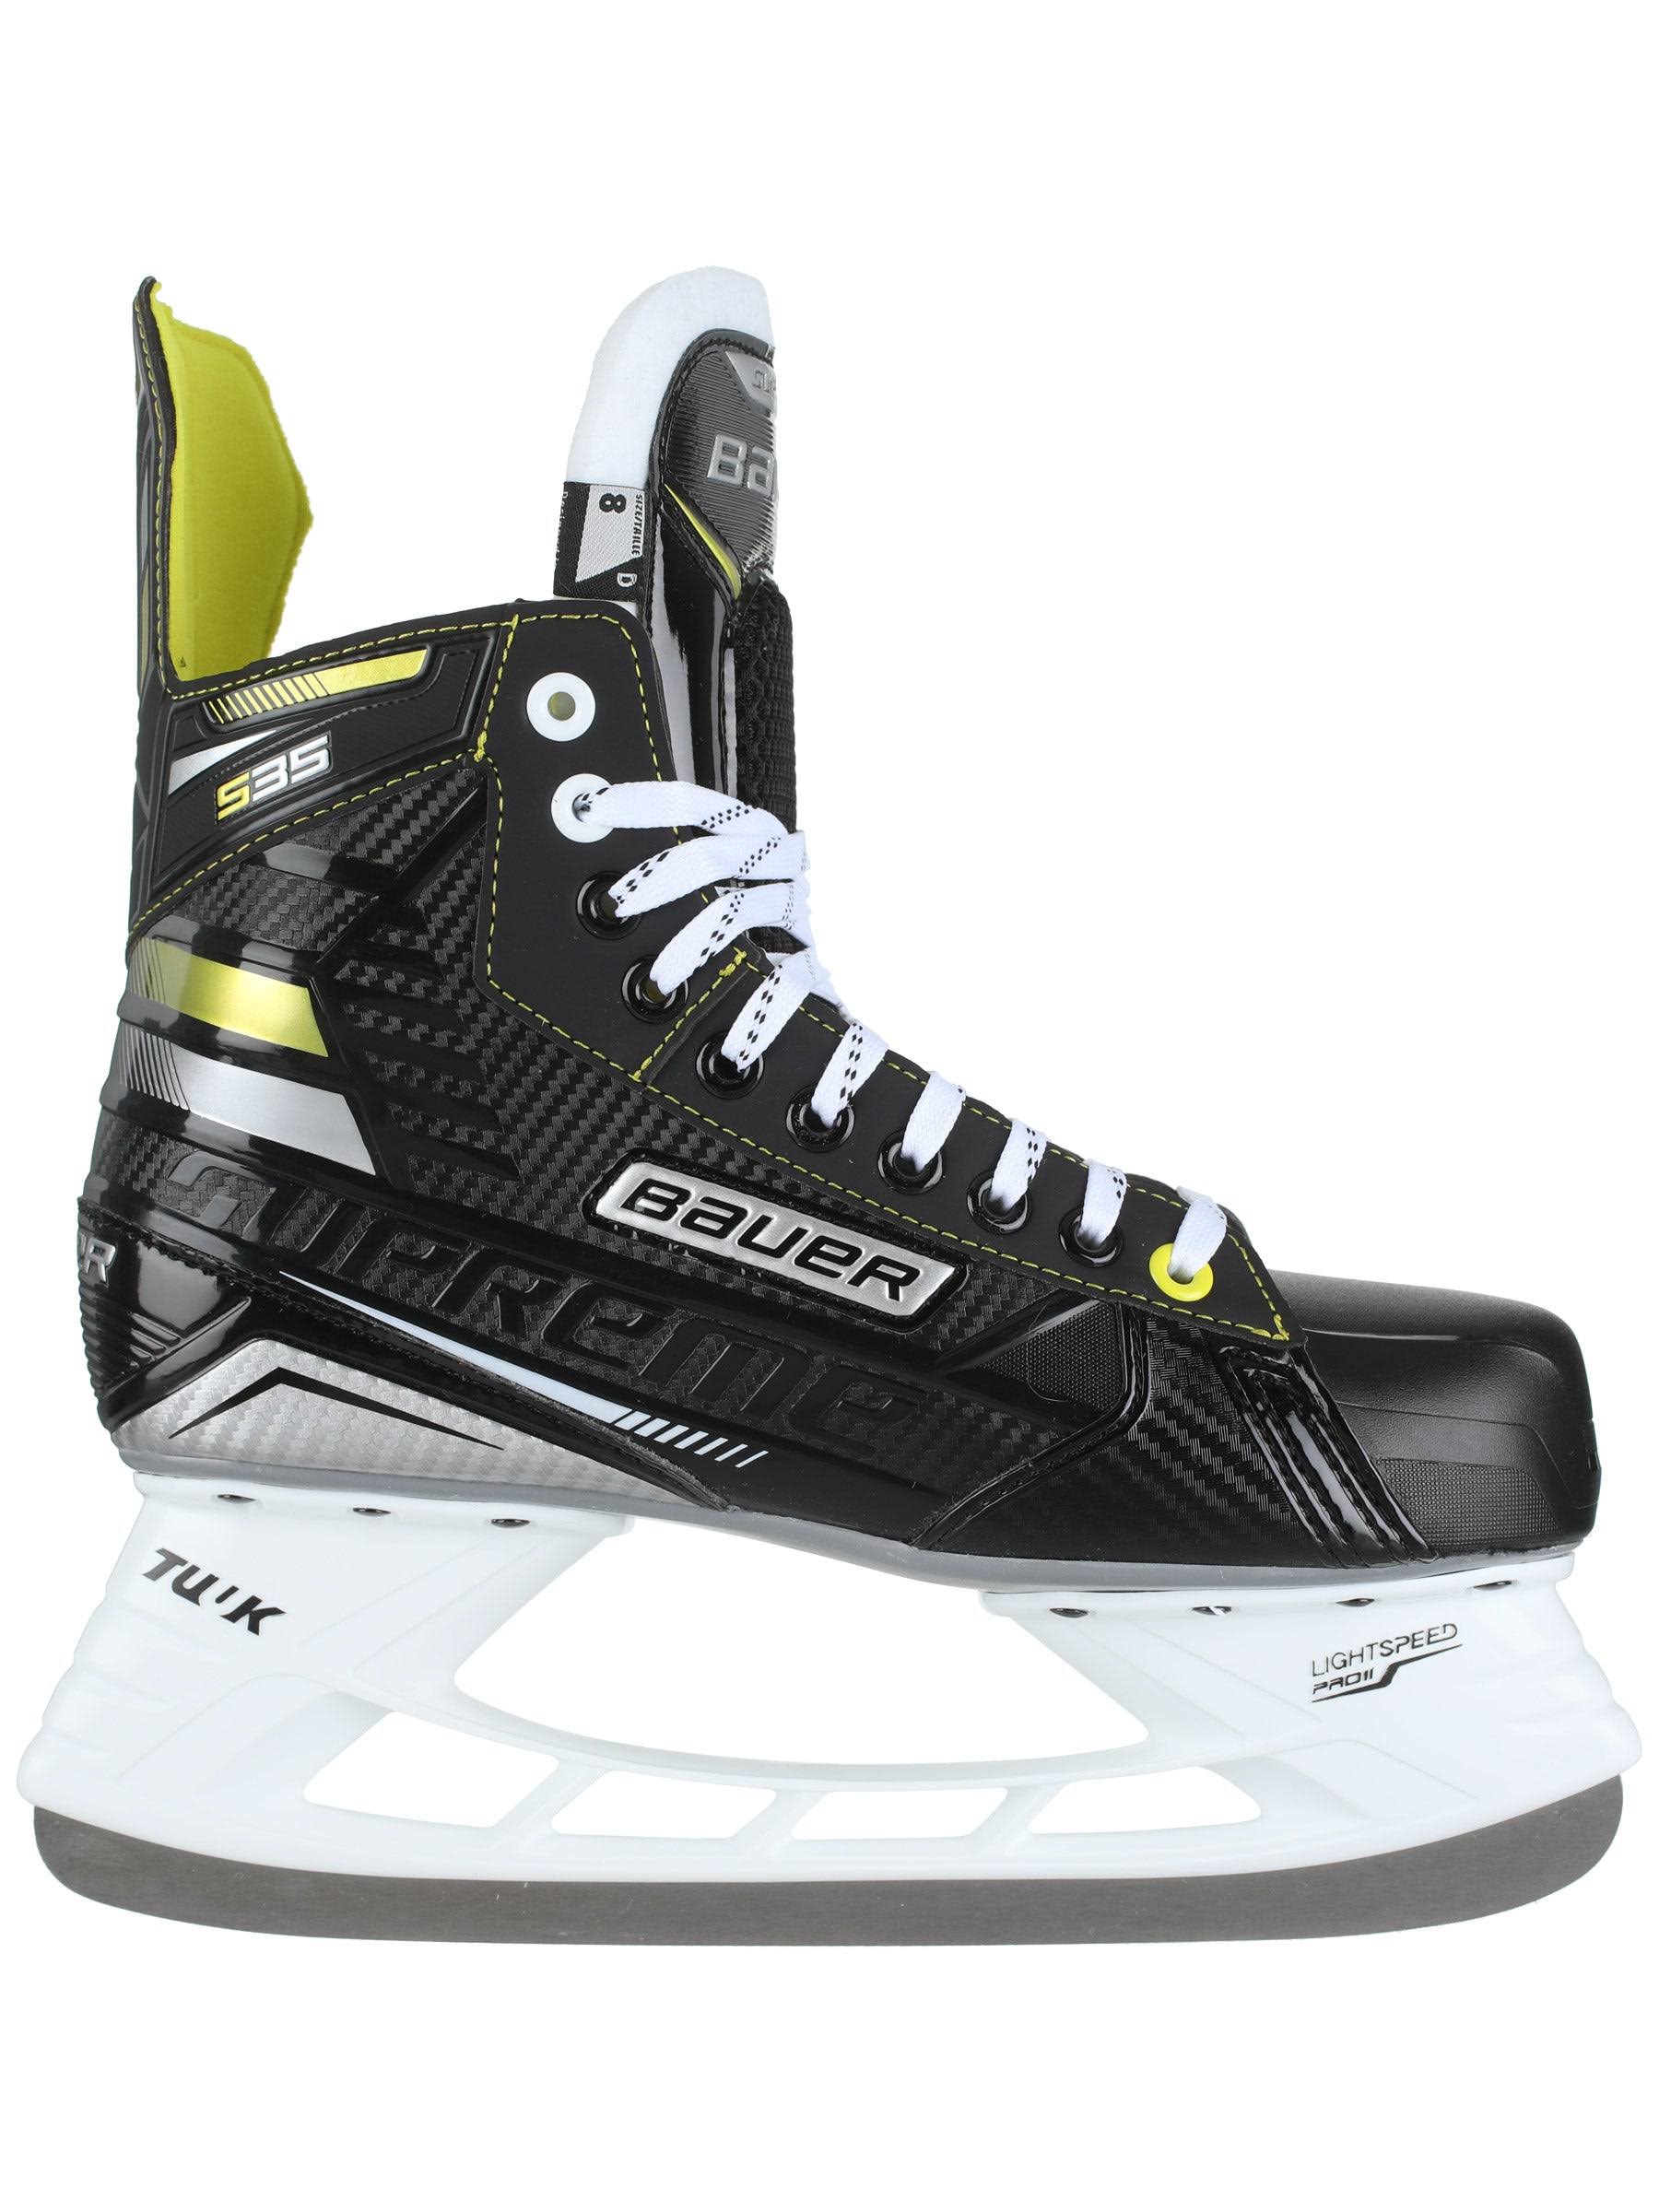 Bauer Supreme S35 Ice Hockey Skates - Senior - 8.5 - D